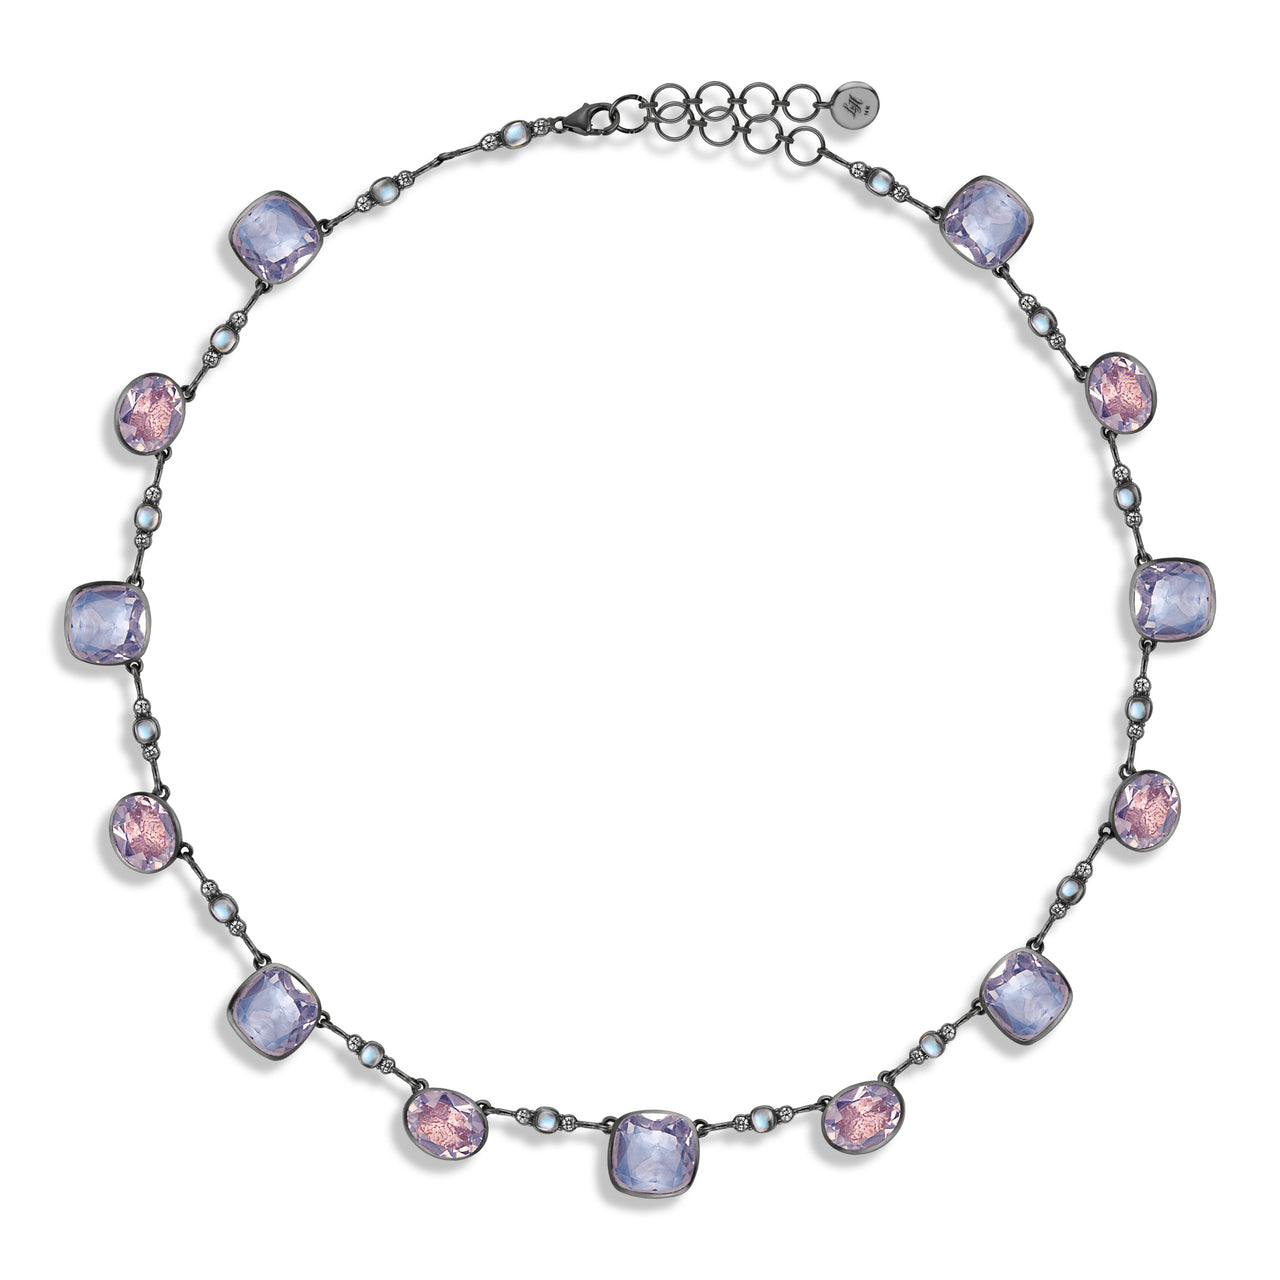 Luzia Cushion Oval Necklace in Lavender Moon Quartz